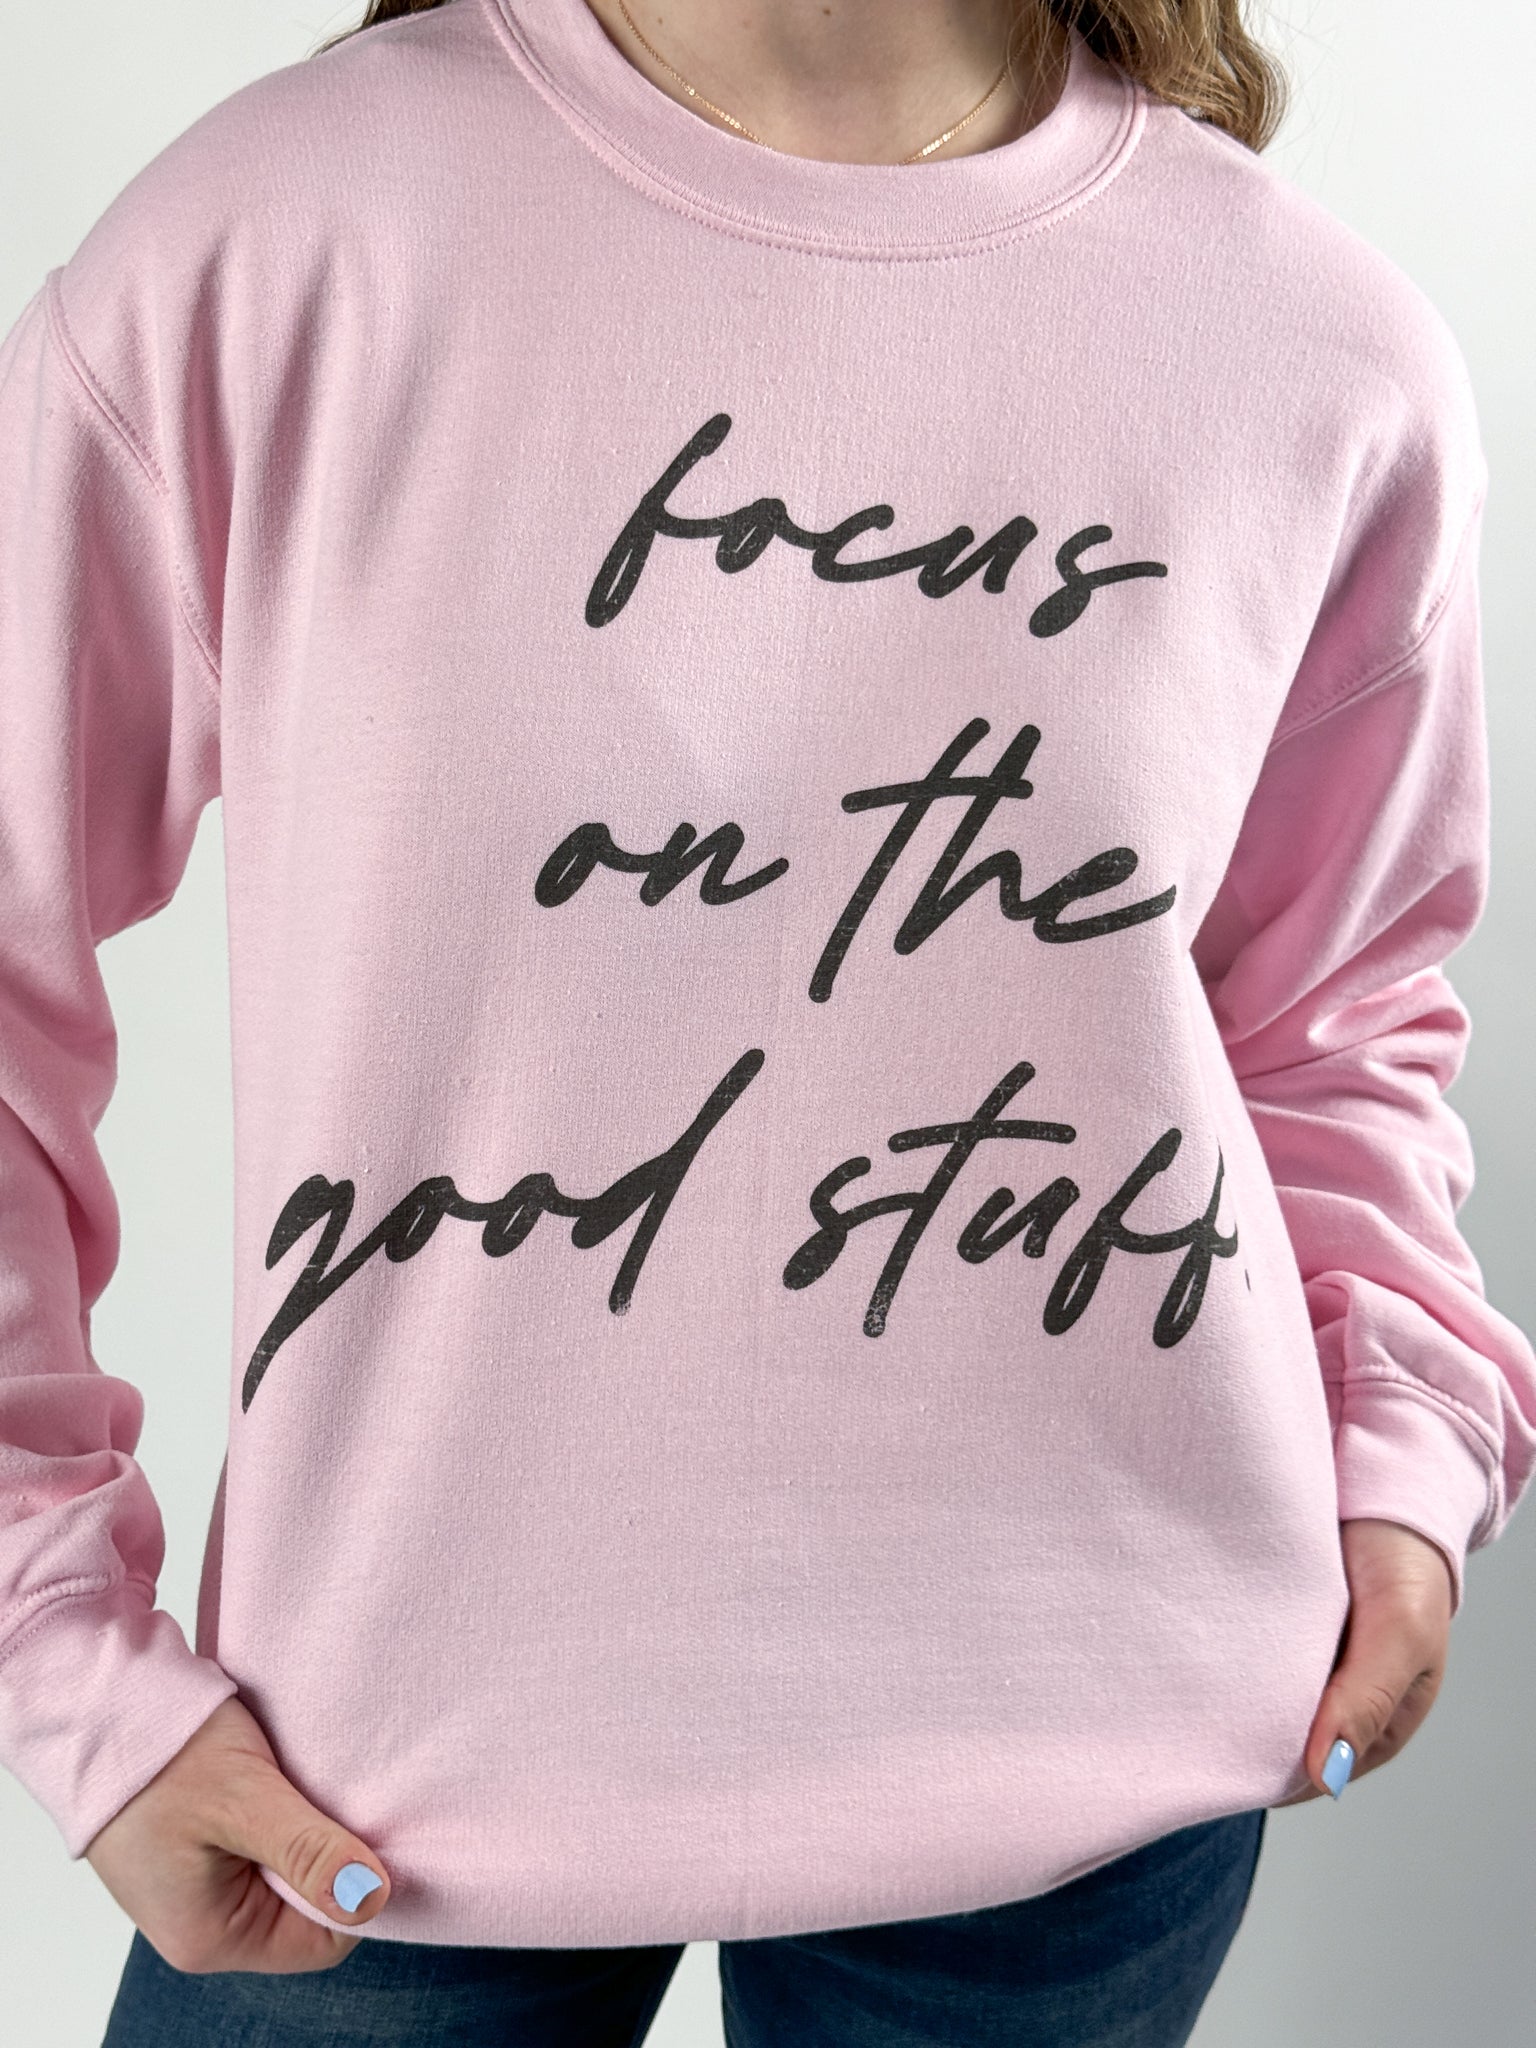 Focus On The Good Stuff Sweatshirt